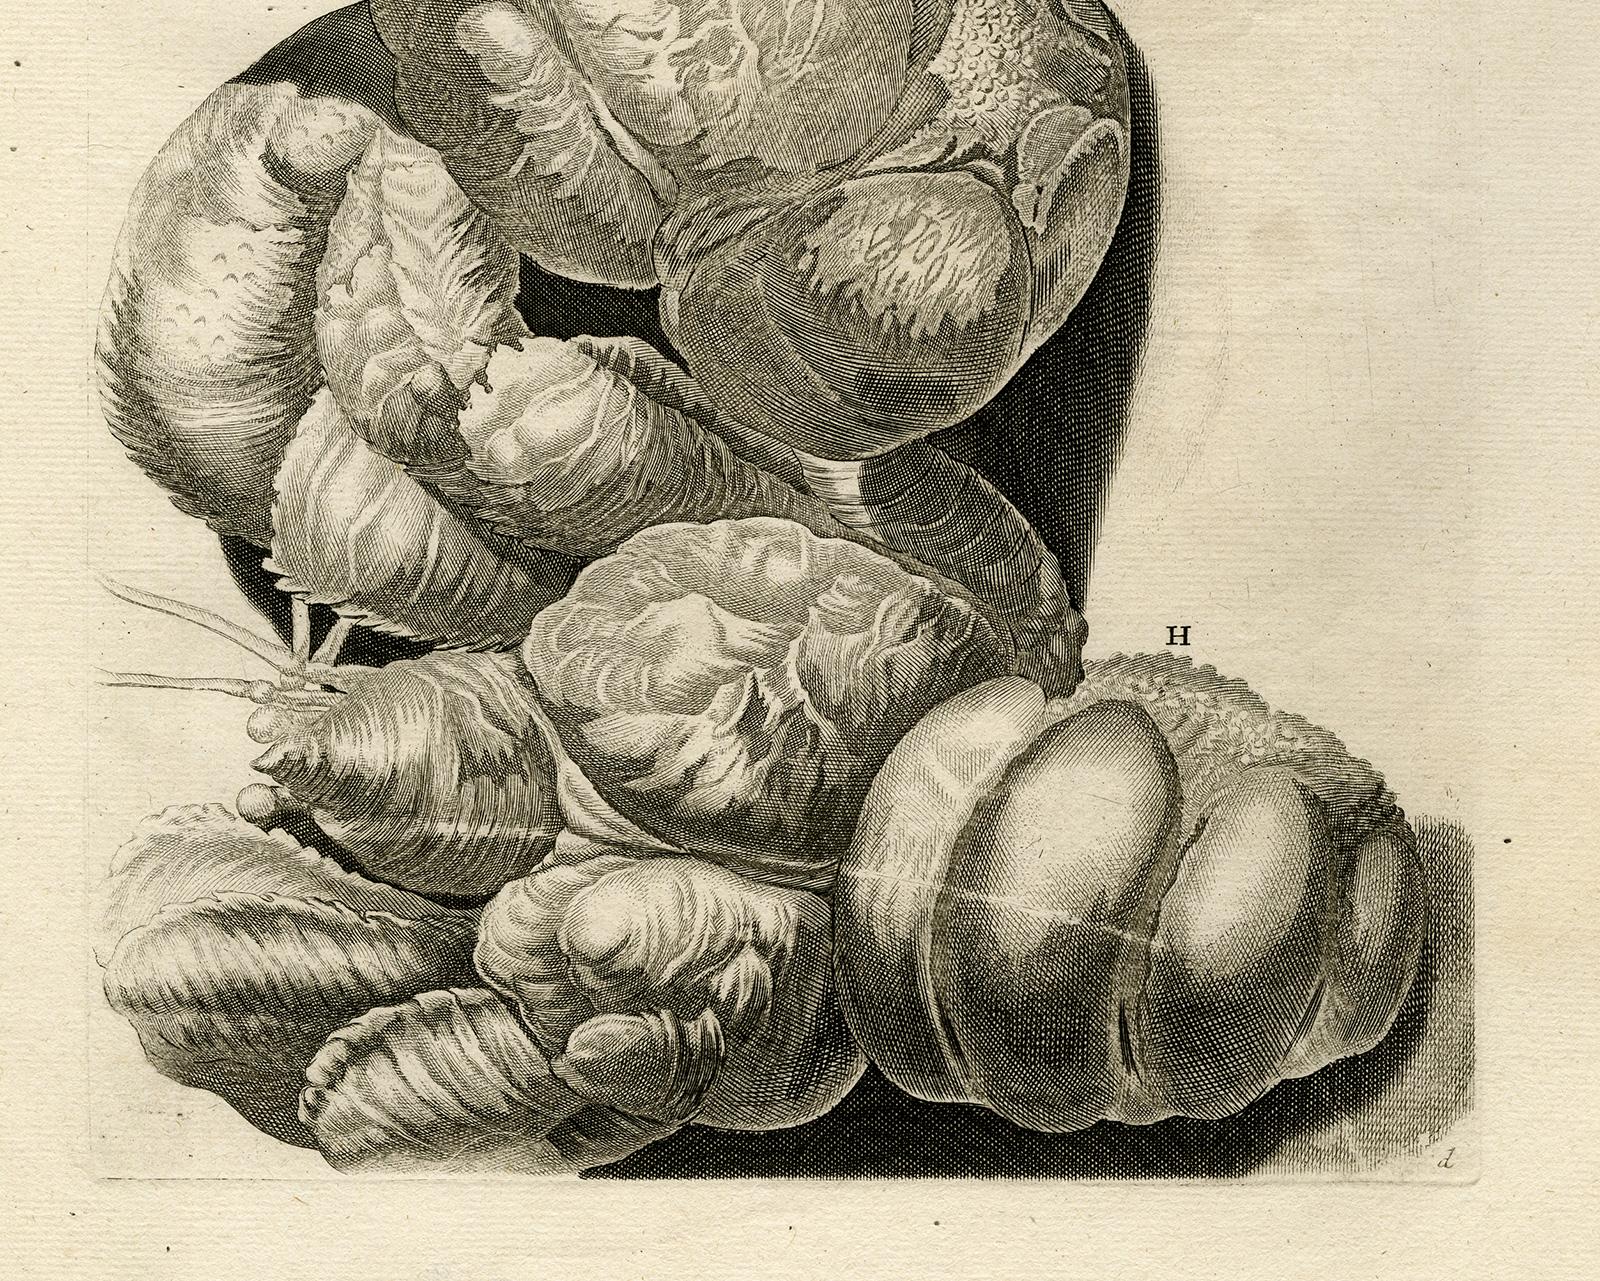 Coconut Crab - Ambonian Cabinet of Curiosities by Rumphius - Engraving - 18th c. - Print by Jorg Eberhardt Rumph